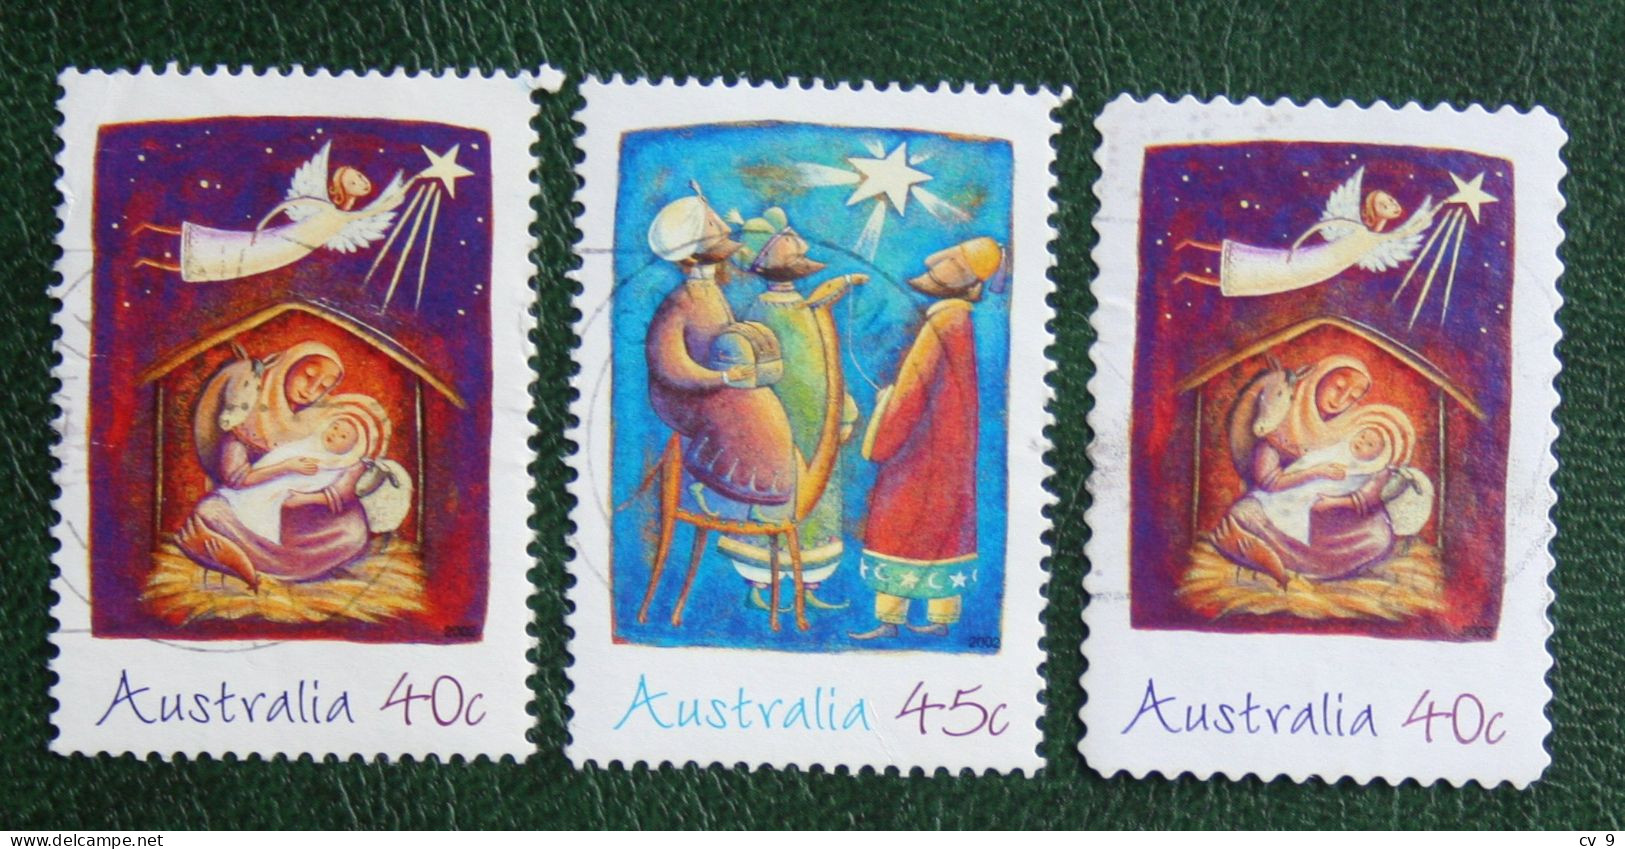 Natale Weihnachten Xmas Noel Kerst 2002 (Mi 2186-2187 2188) Used Gebruikt Oblitere Australia Australien Australie - Oblitérés